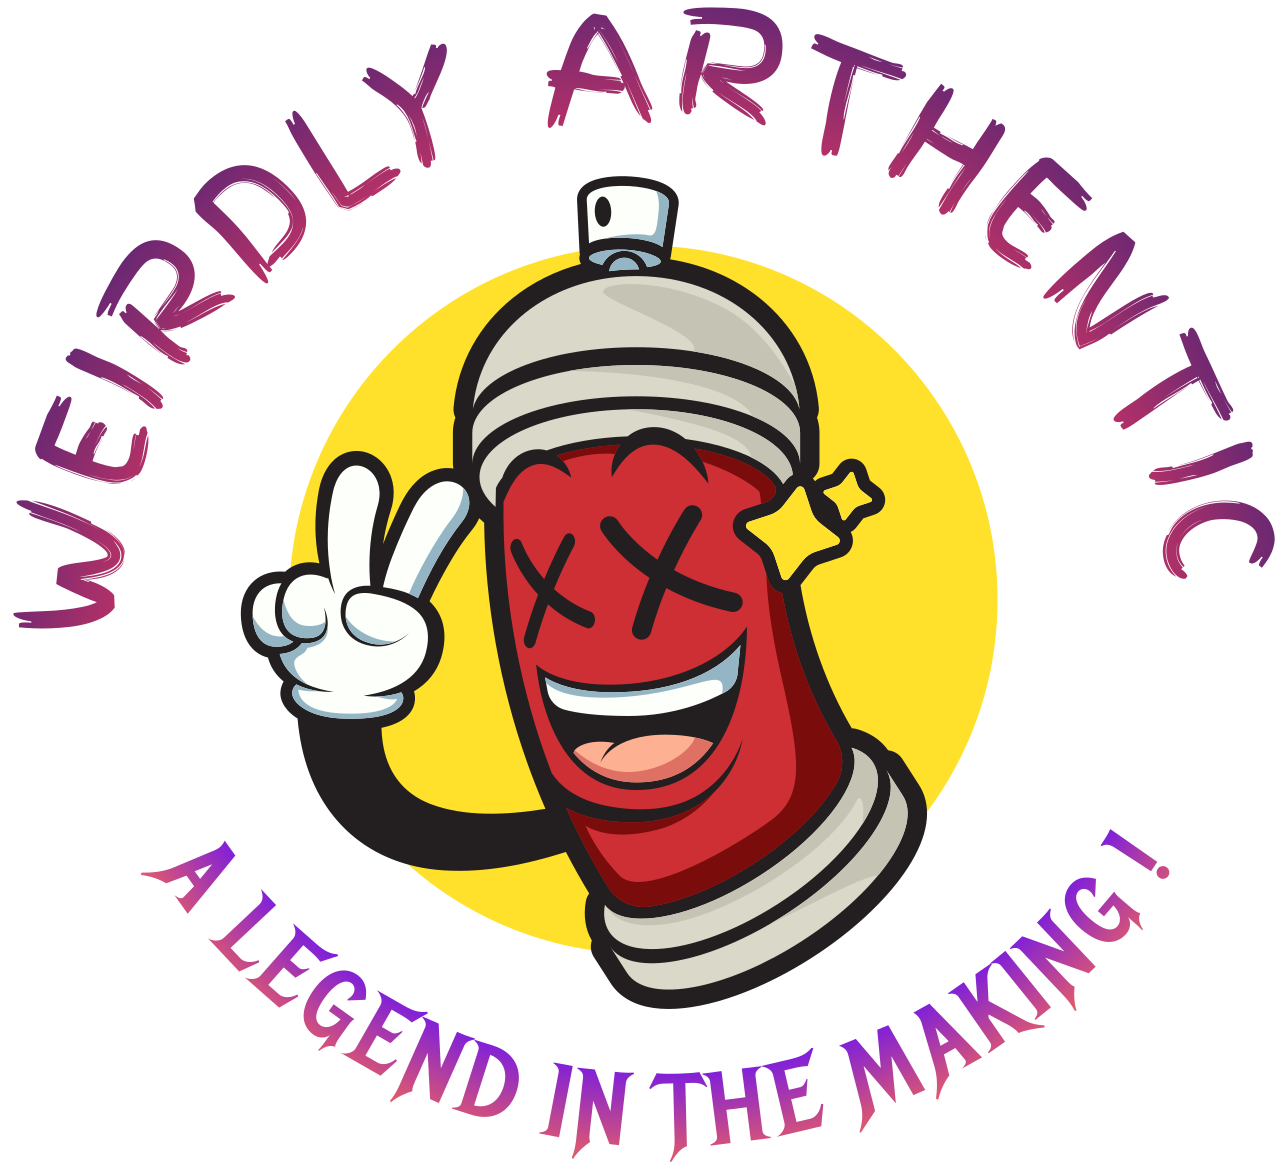 WEIRDLY ARTHENTIC 's logo